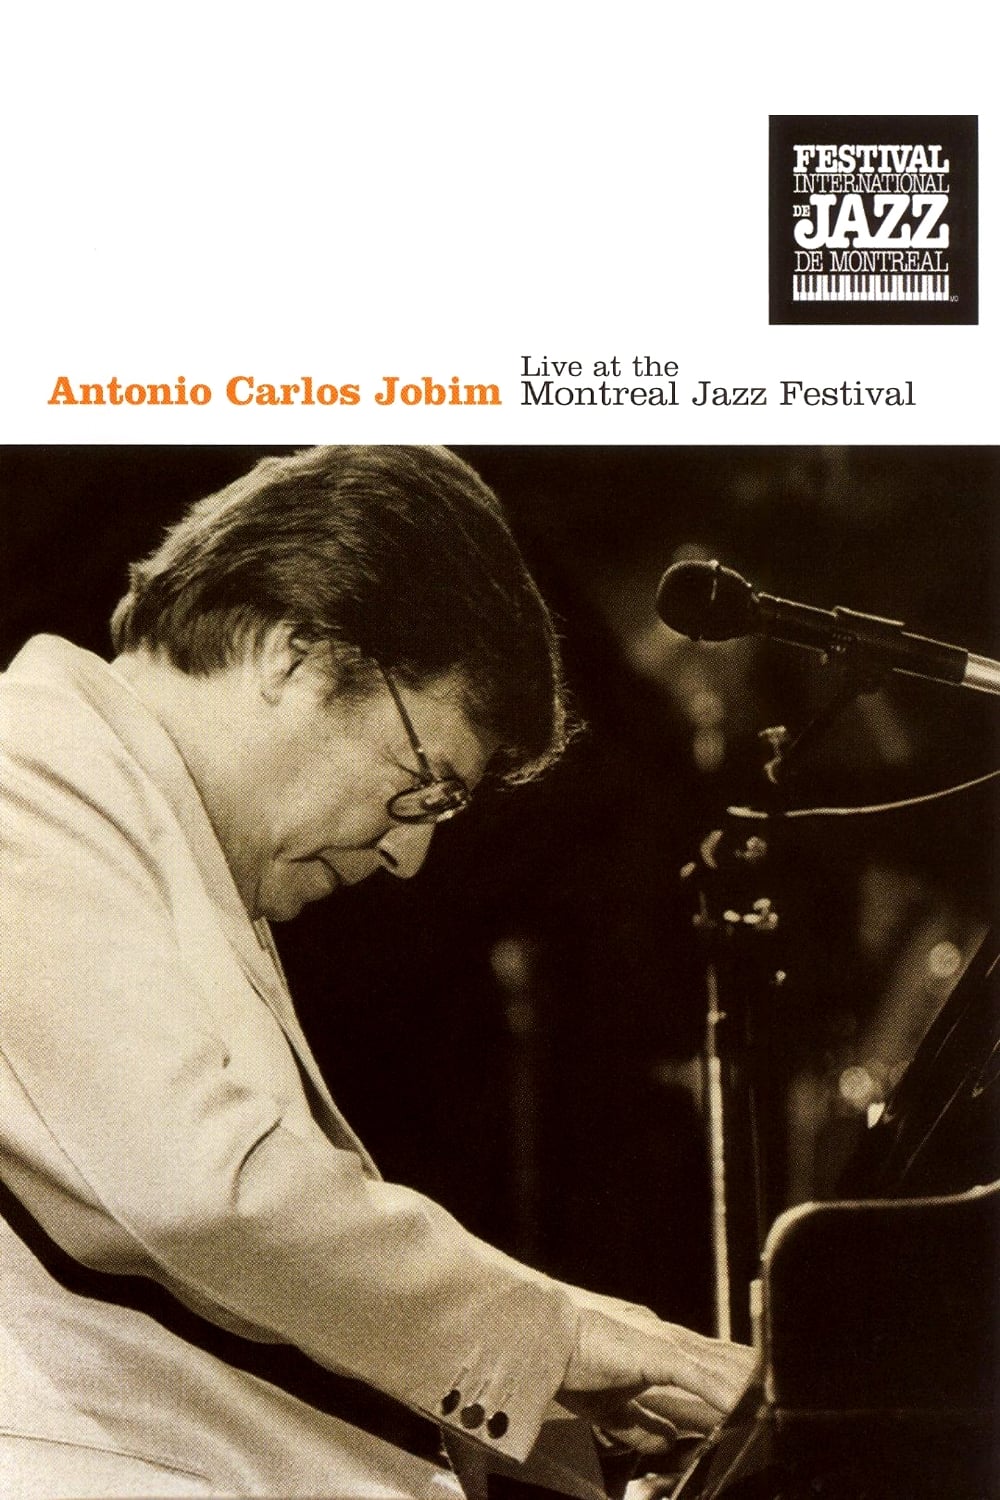 Antonio Carlos Jobim: Live at the Montreal Jazz Festival